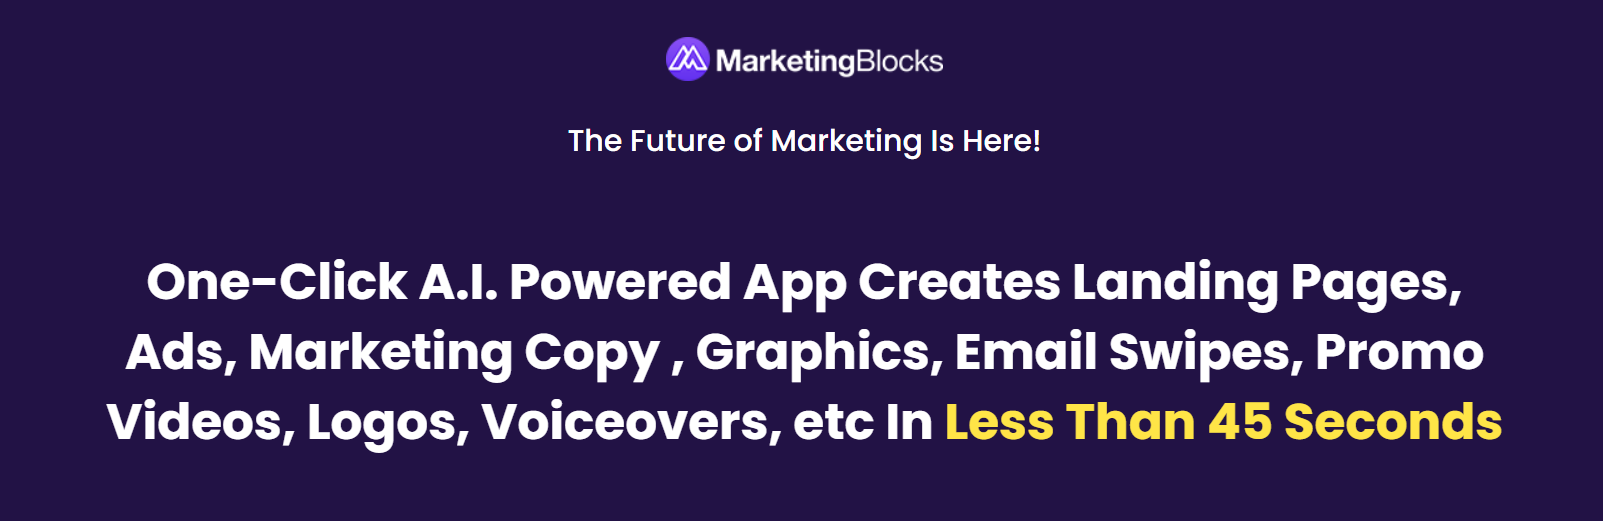 Marketing Blocks A.I Powered App